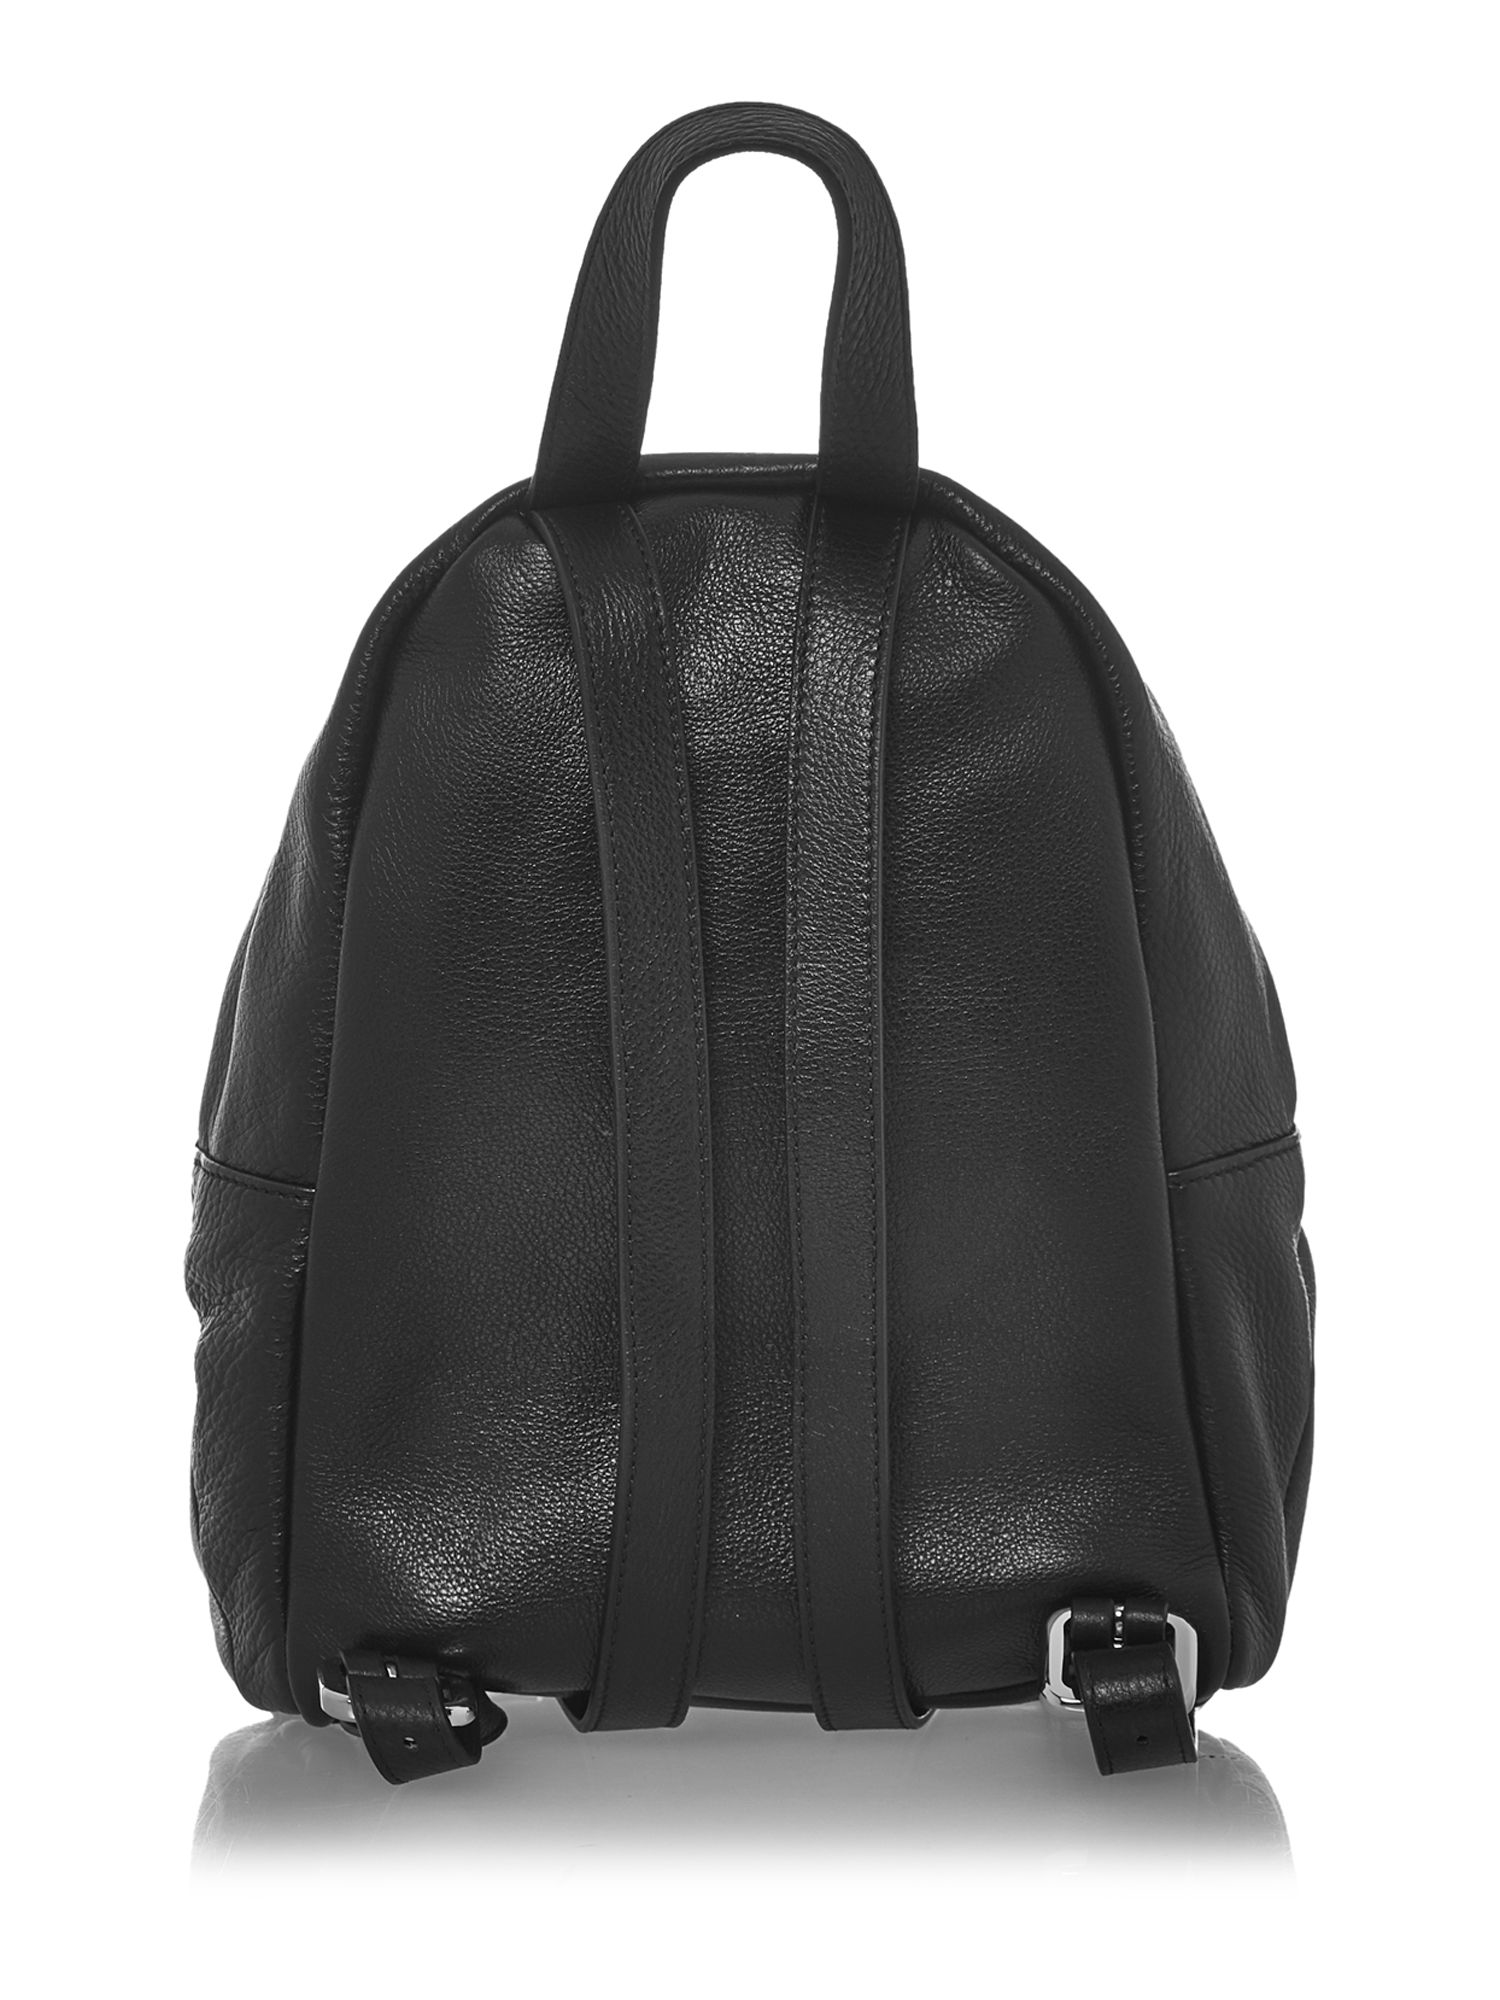 Lyst - Coccinelle Saint Moriz Black Mini Backpack in Black